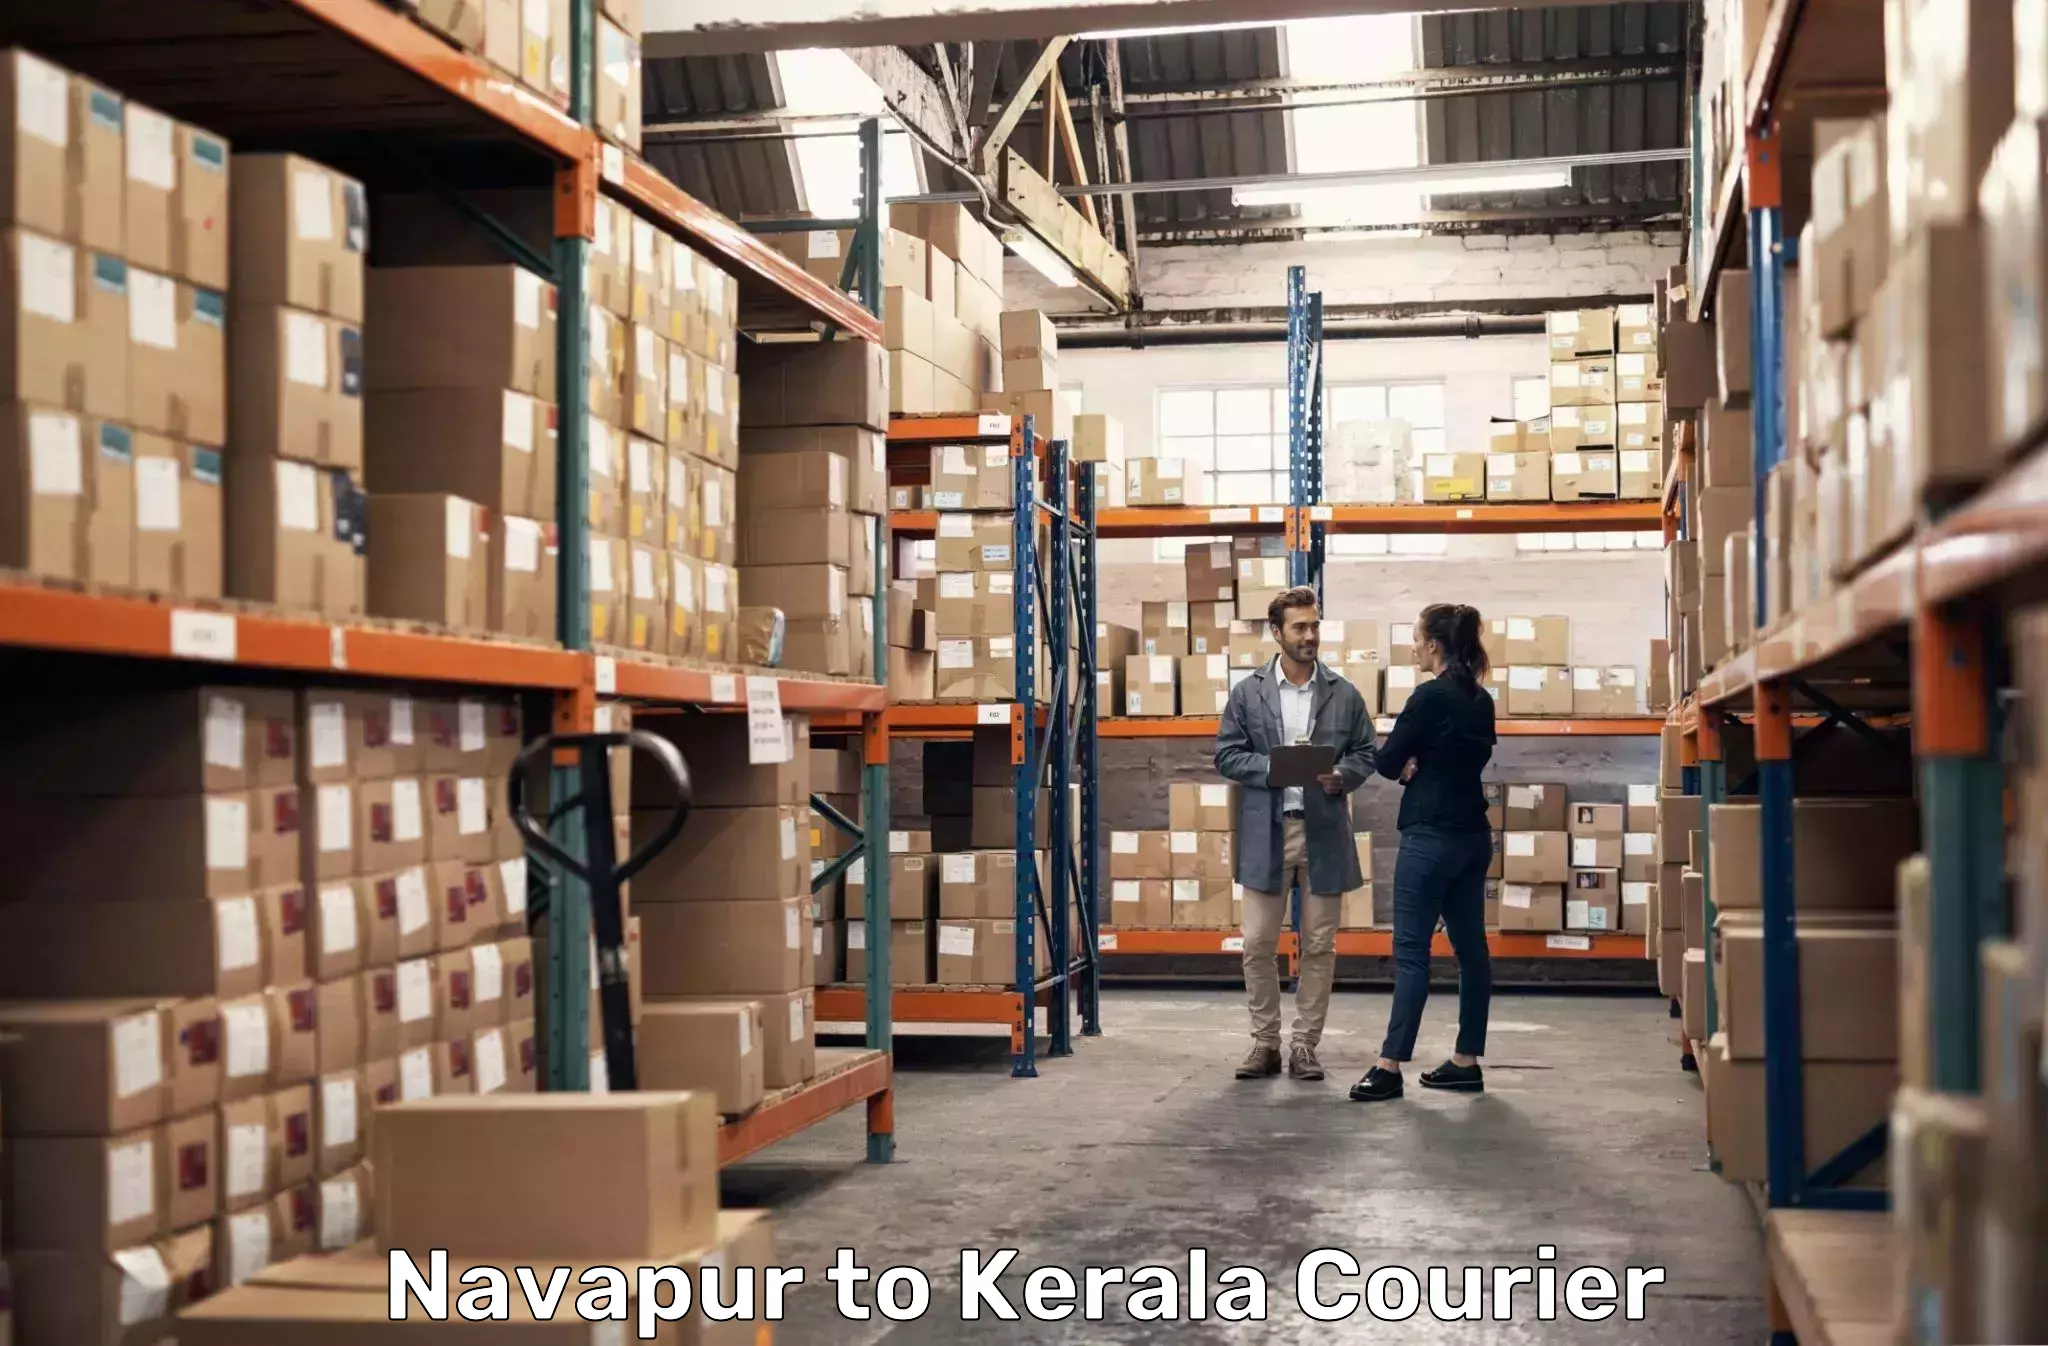 Flexible delivery scheduling Navapur to Koyilandy